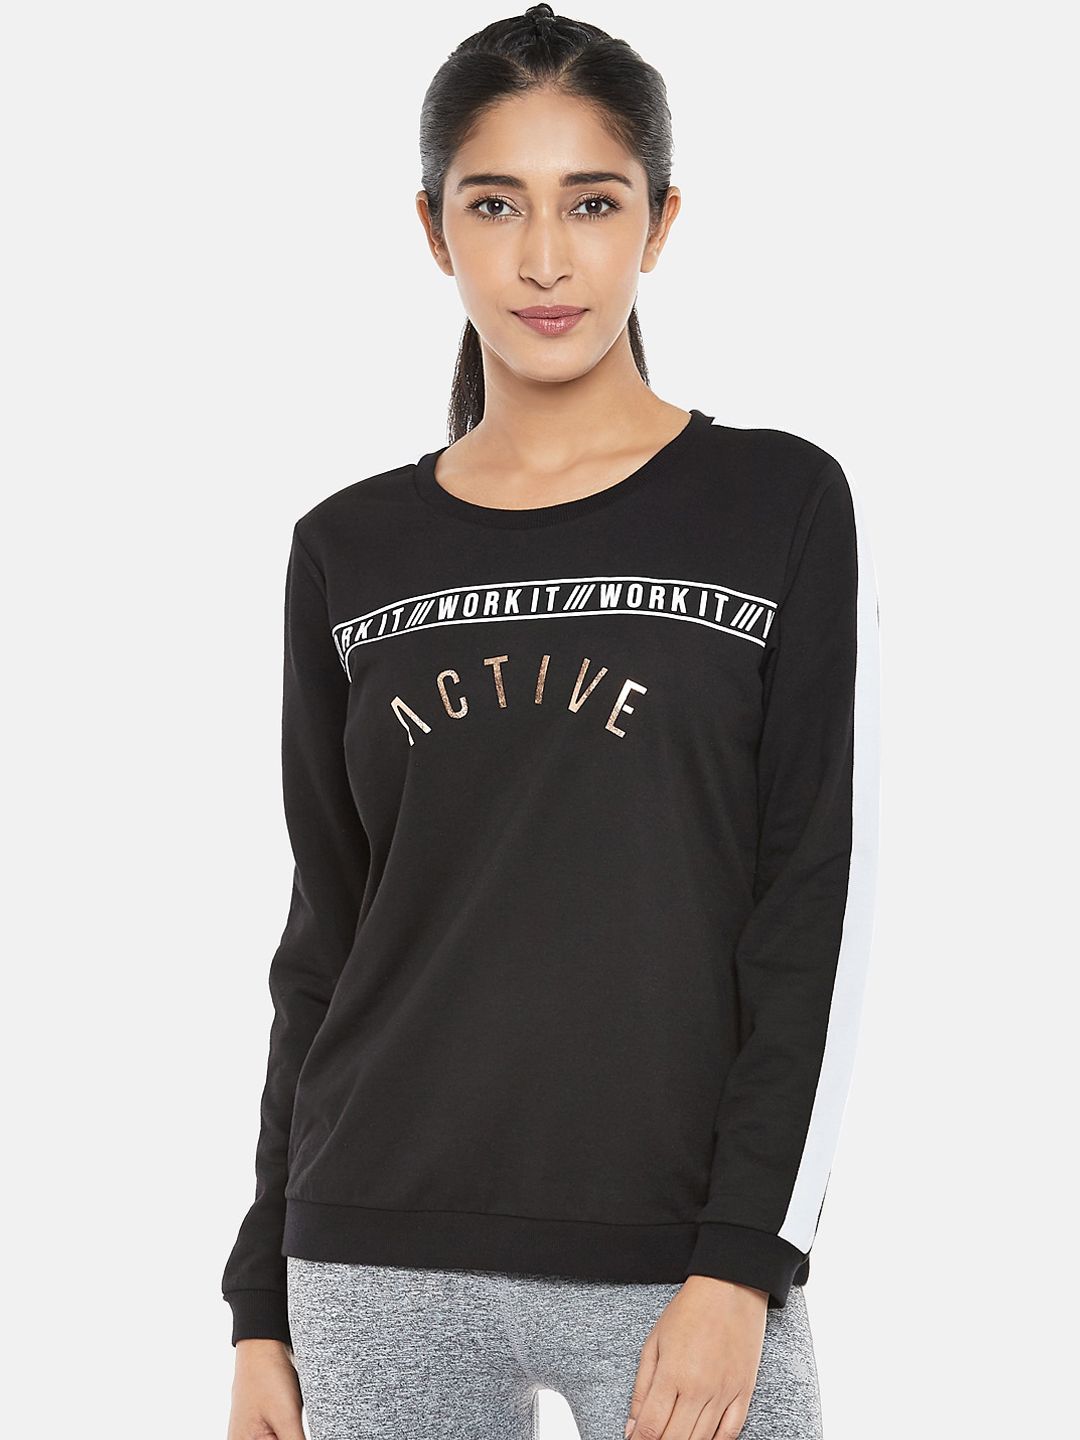 Ajile by Pantaloons Women Black& White Typography Print Cotton Sweatshirt Price in India